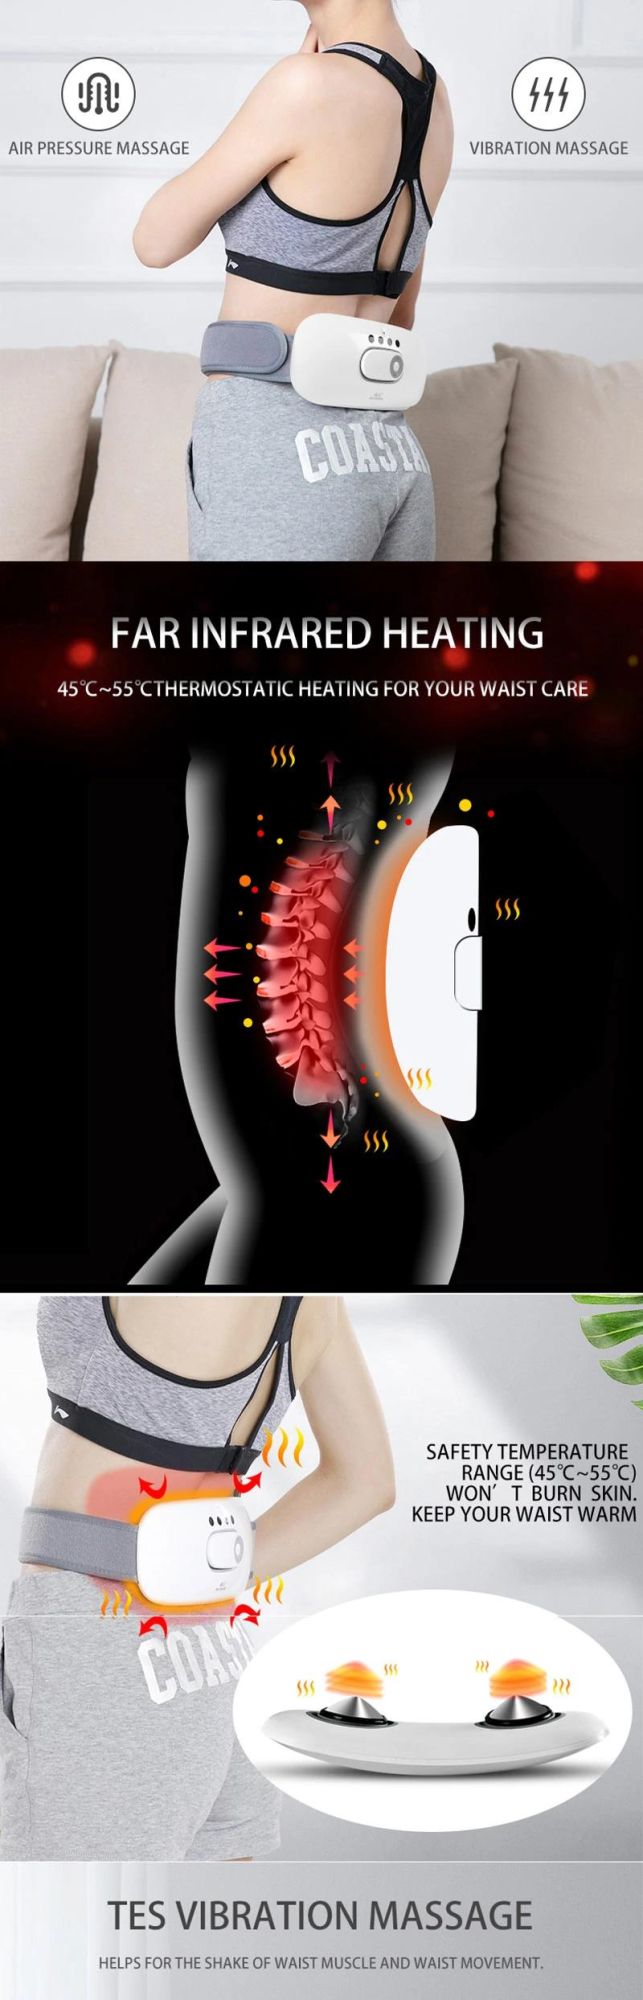 Electric Heating Lady Uterus Menstrual Stomachache Waist Pain Vibration Massager Pulse Hot Compress